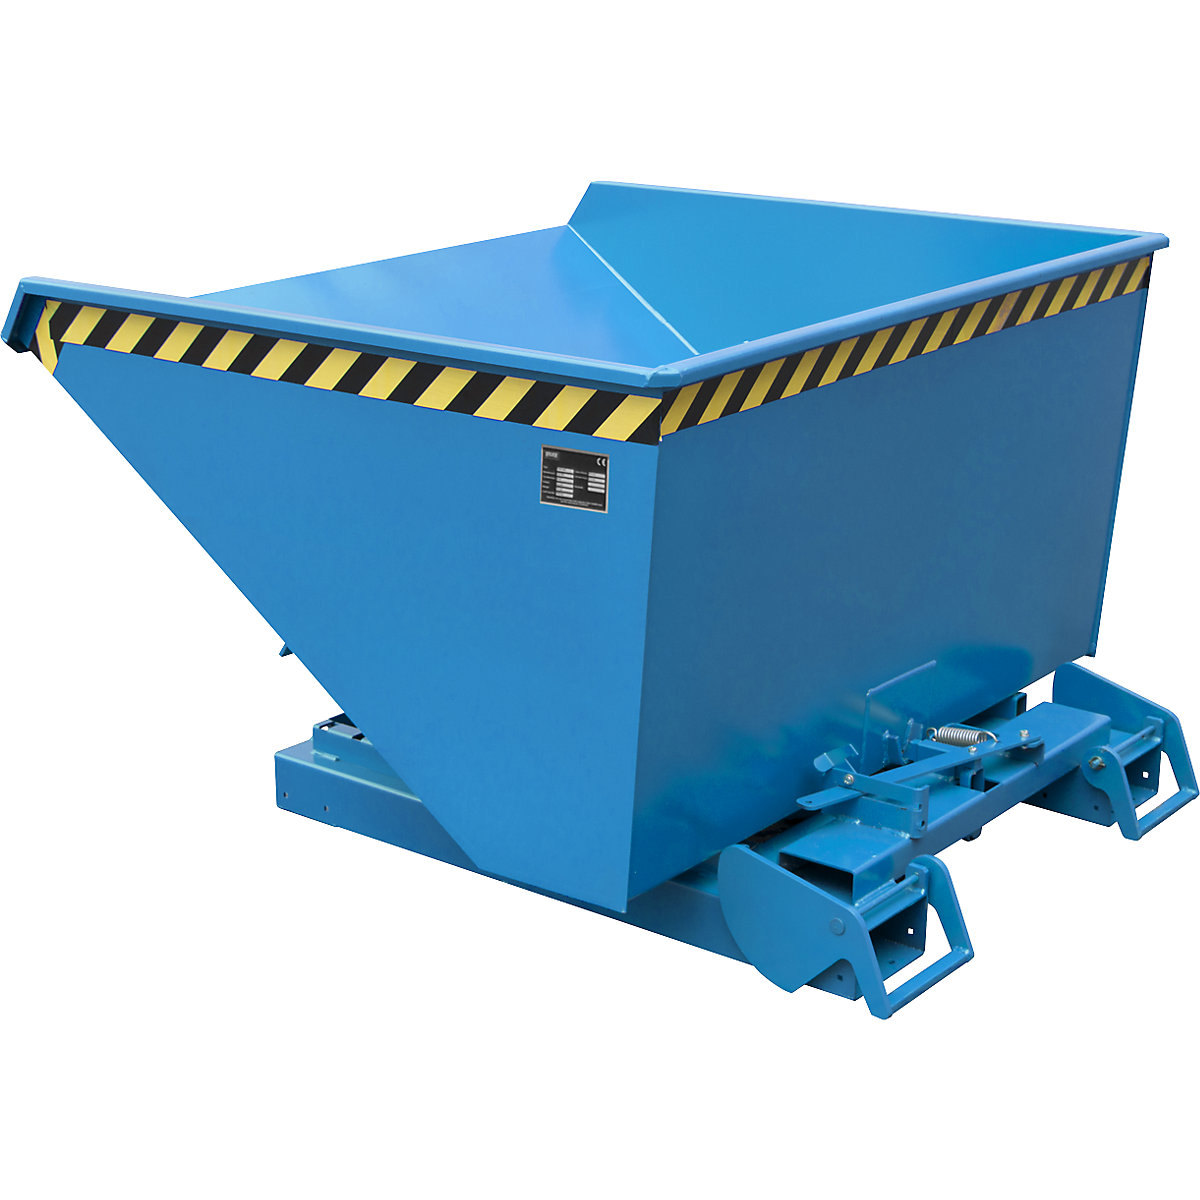 EUROKRAFTpro – Automatic tilting skip, capacity 1.2 m³, blue RAL 5012